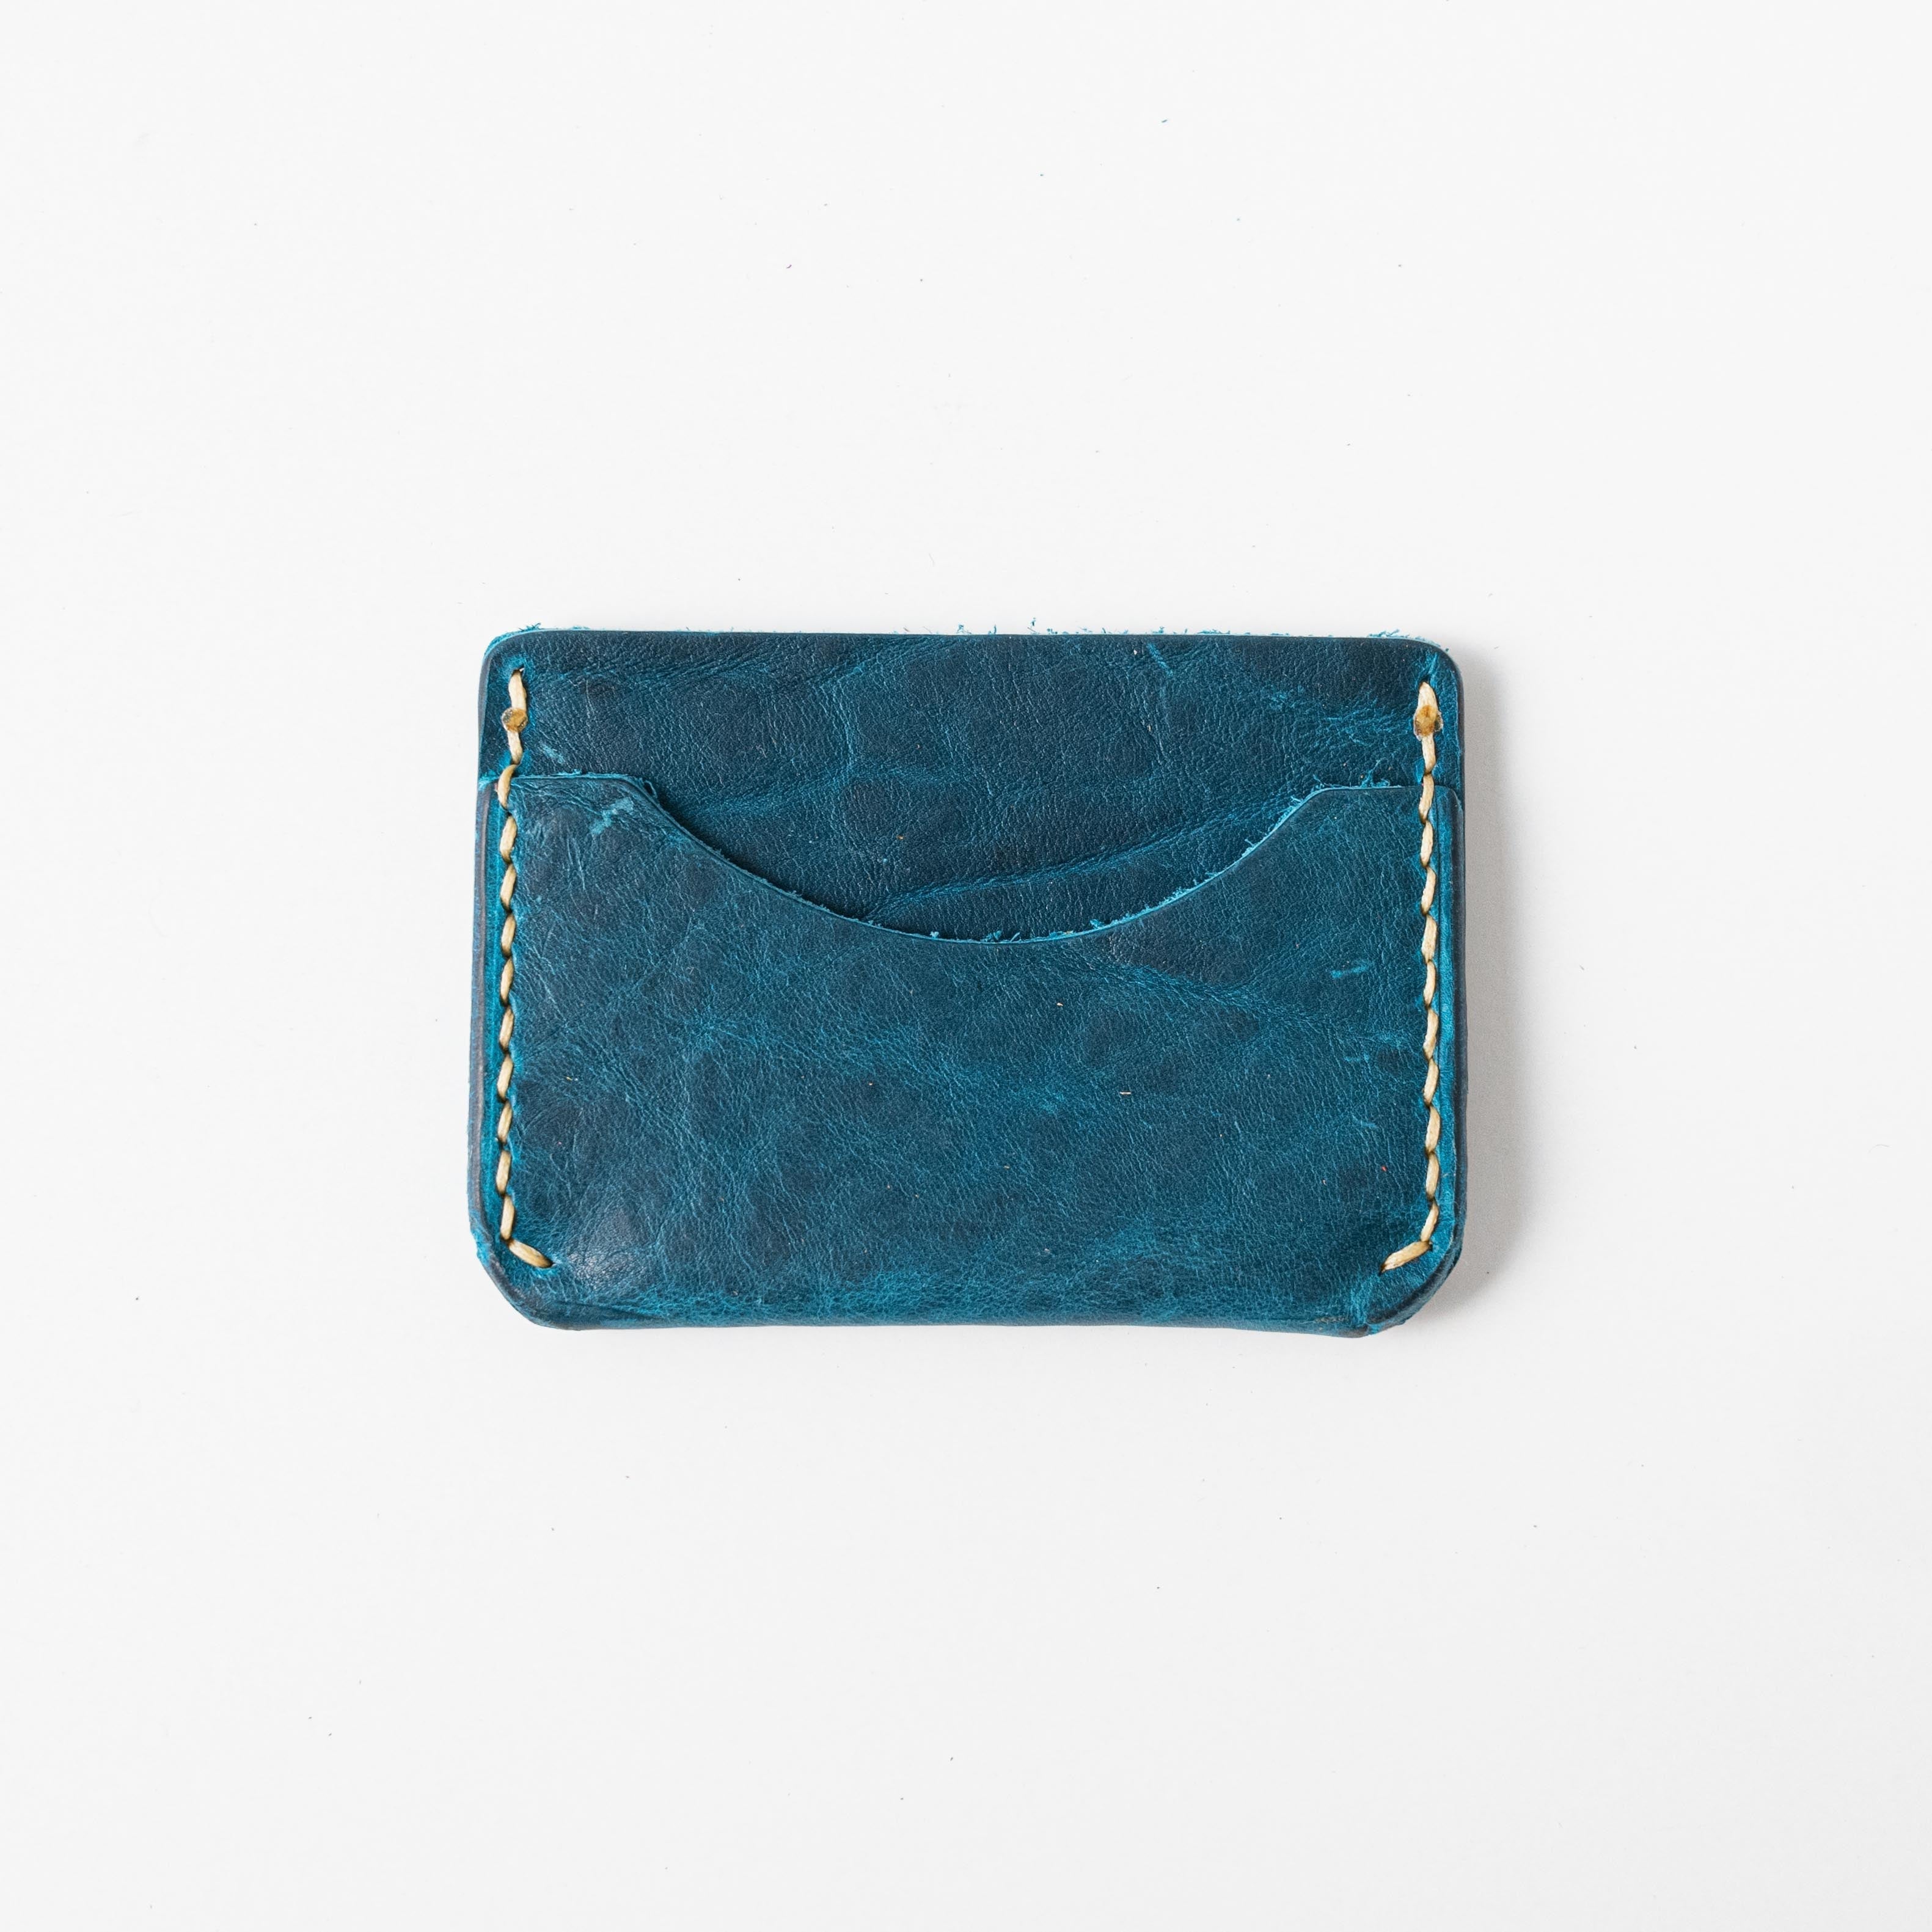 Petrol Blue Bison Card Case- mens leather wallet - leather wallets for women - KMM &amp; Co.